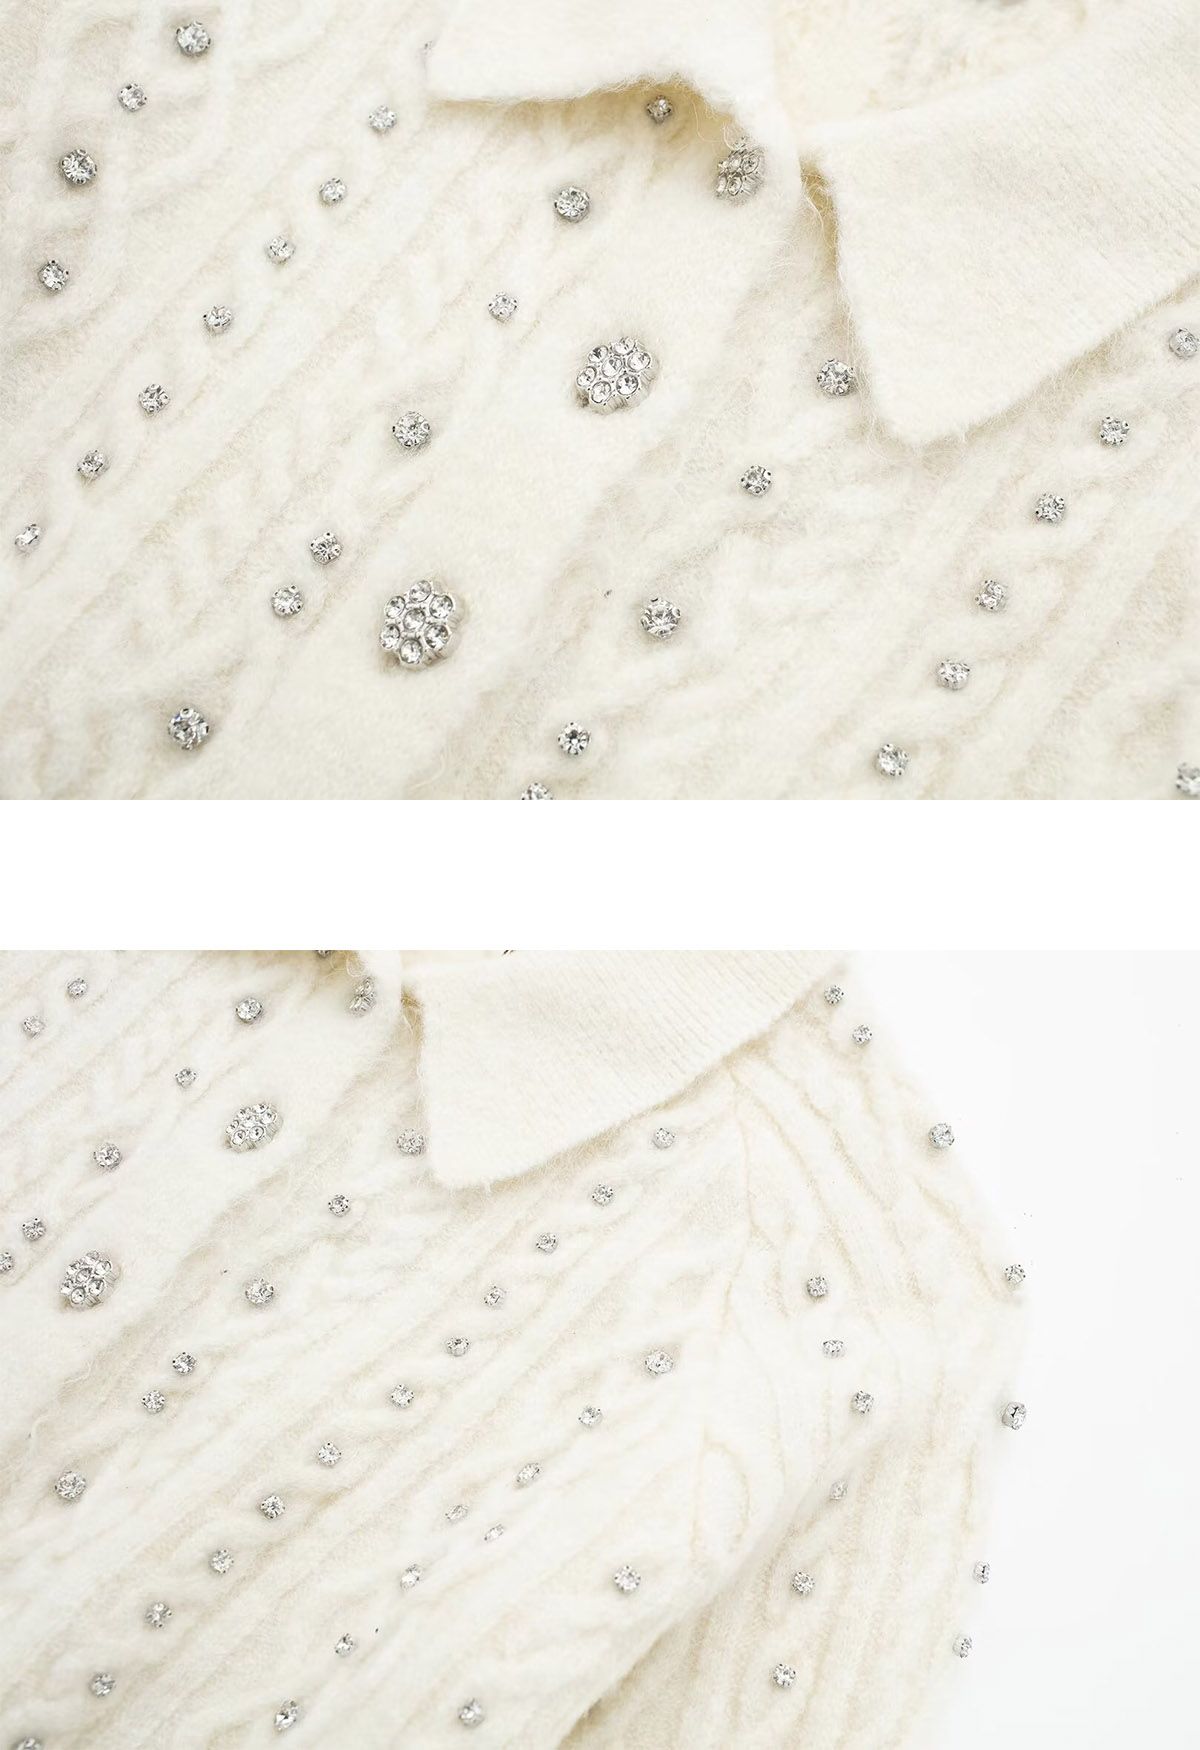 Exquisite Rhinestone Braided Knit Cropped Cardigan